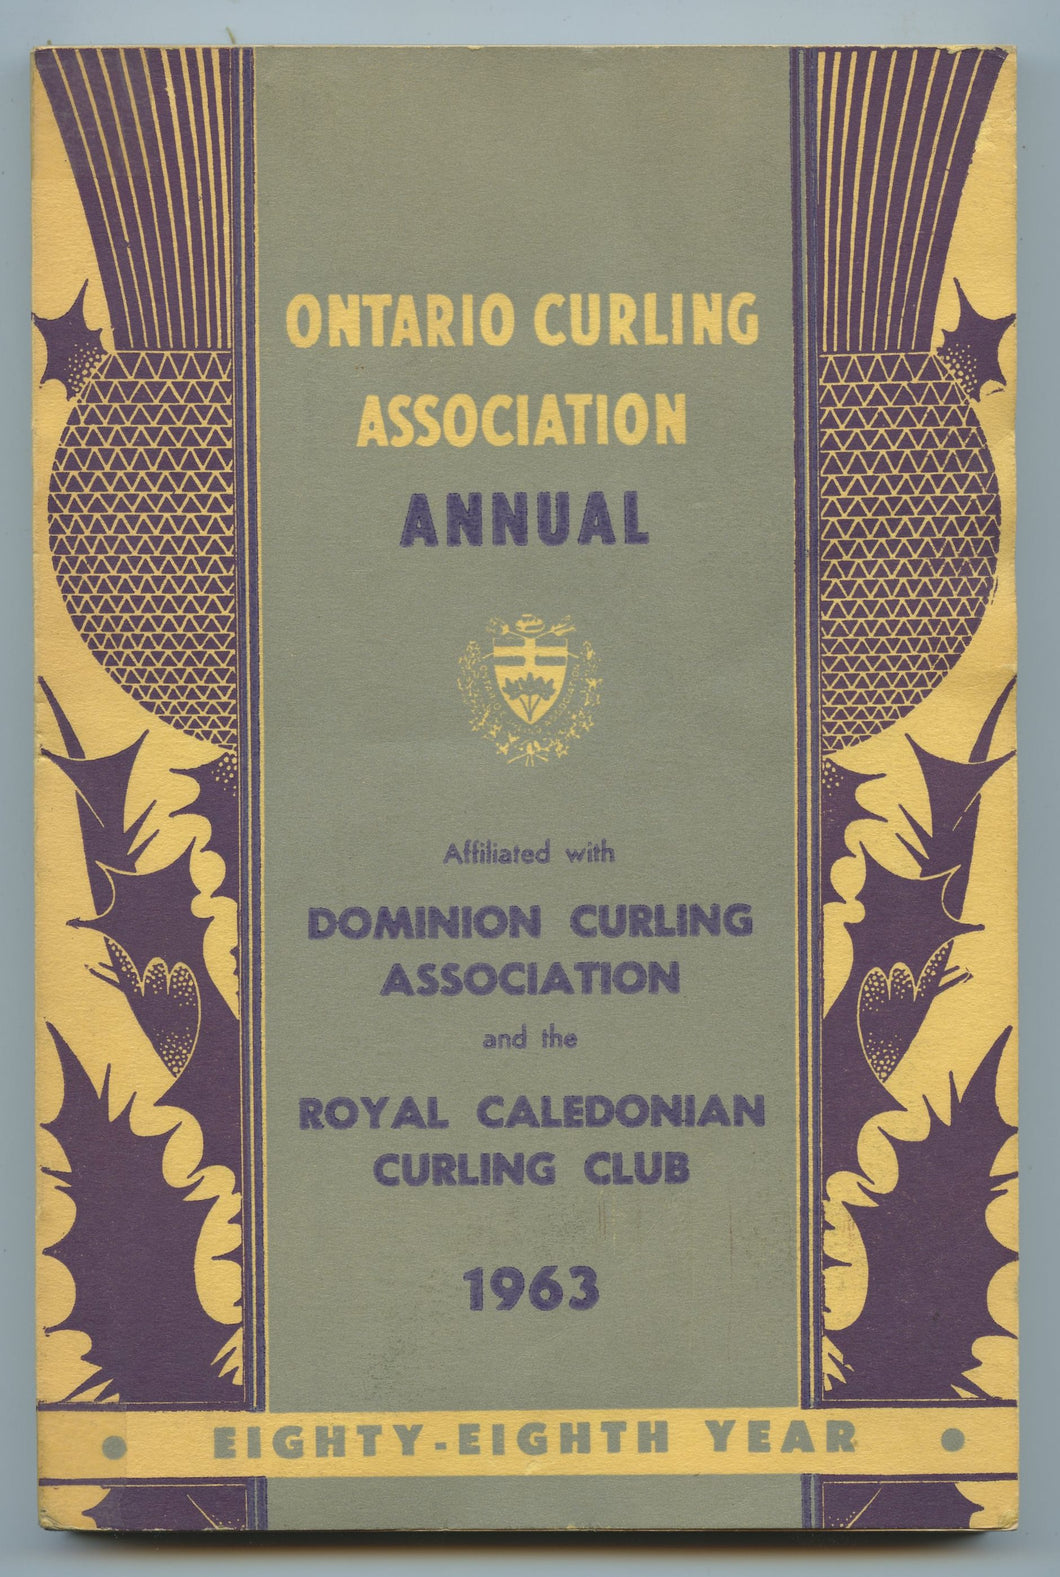 Ontario Curling Association Annual